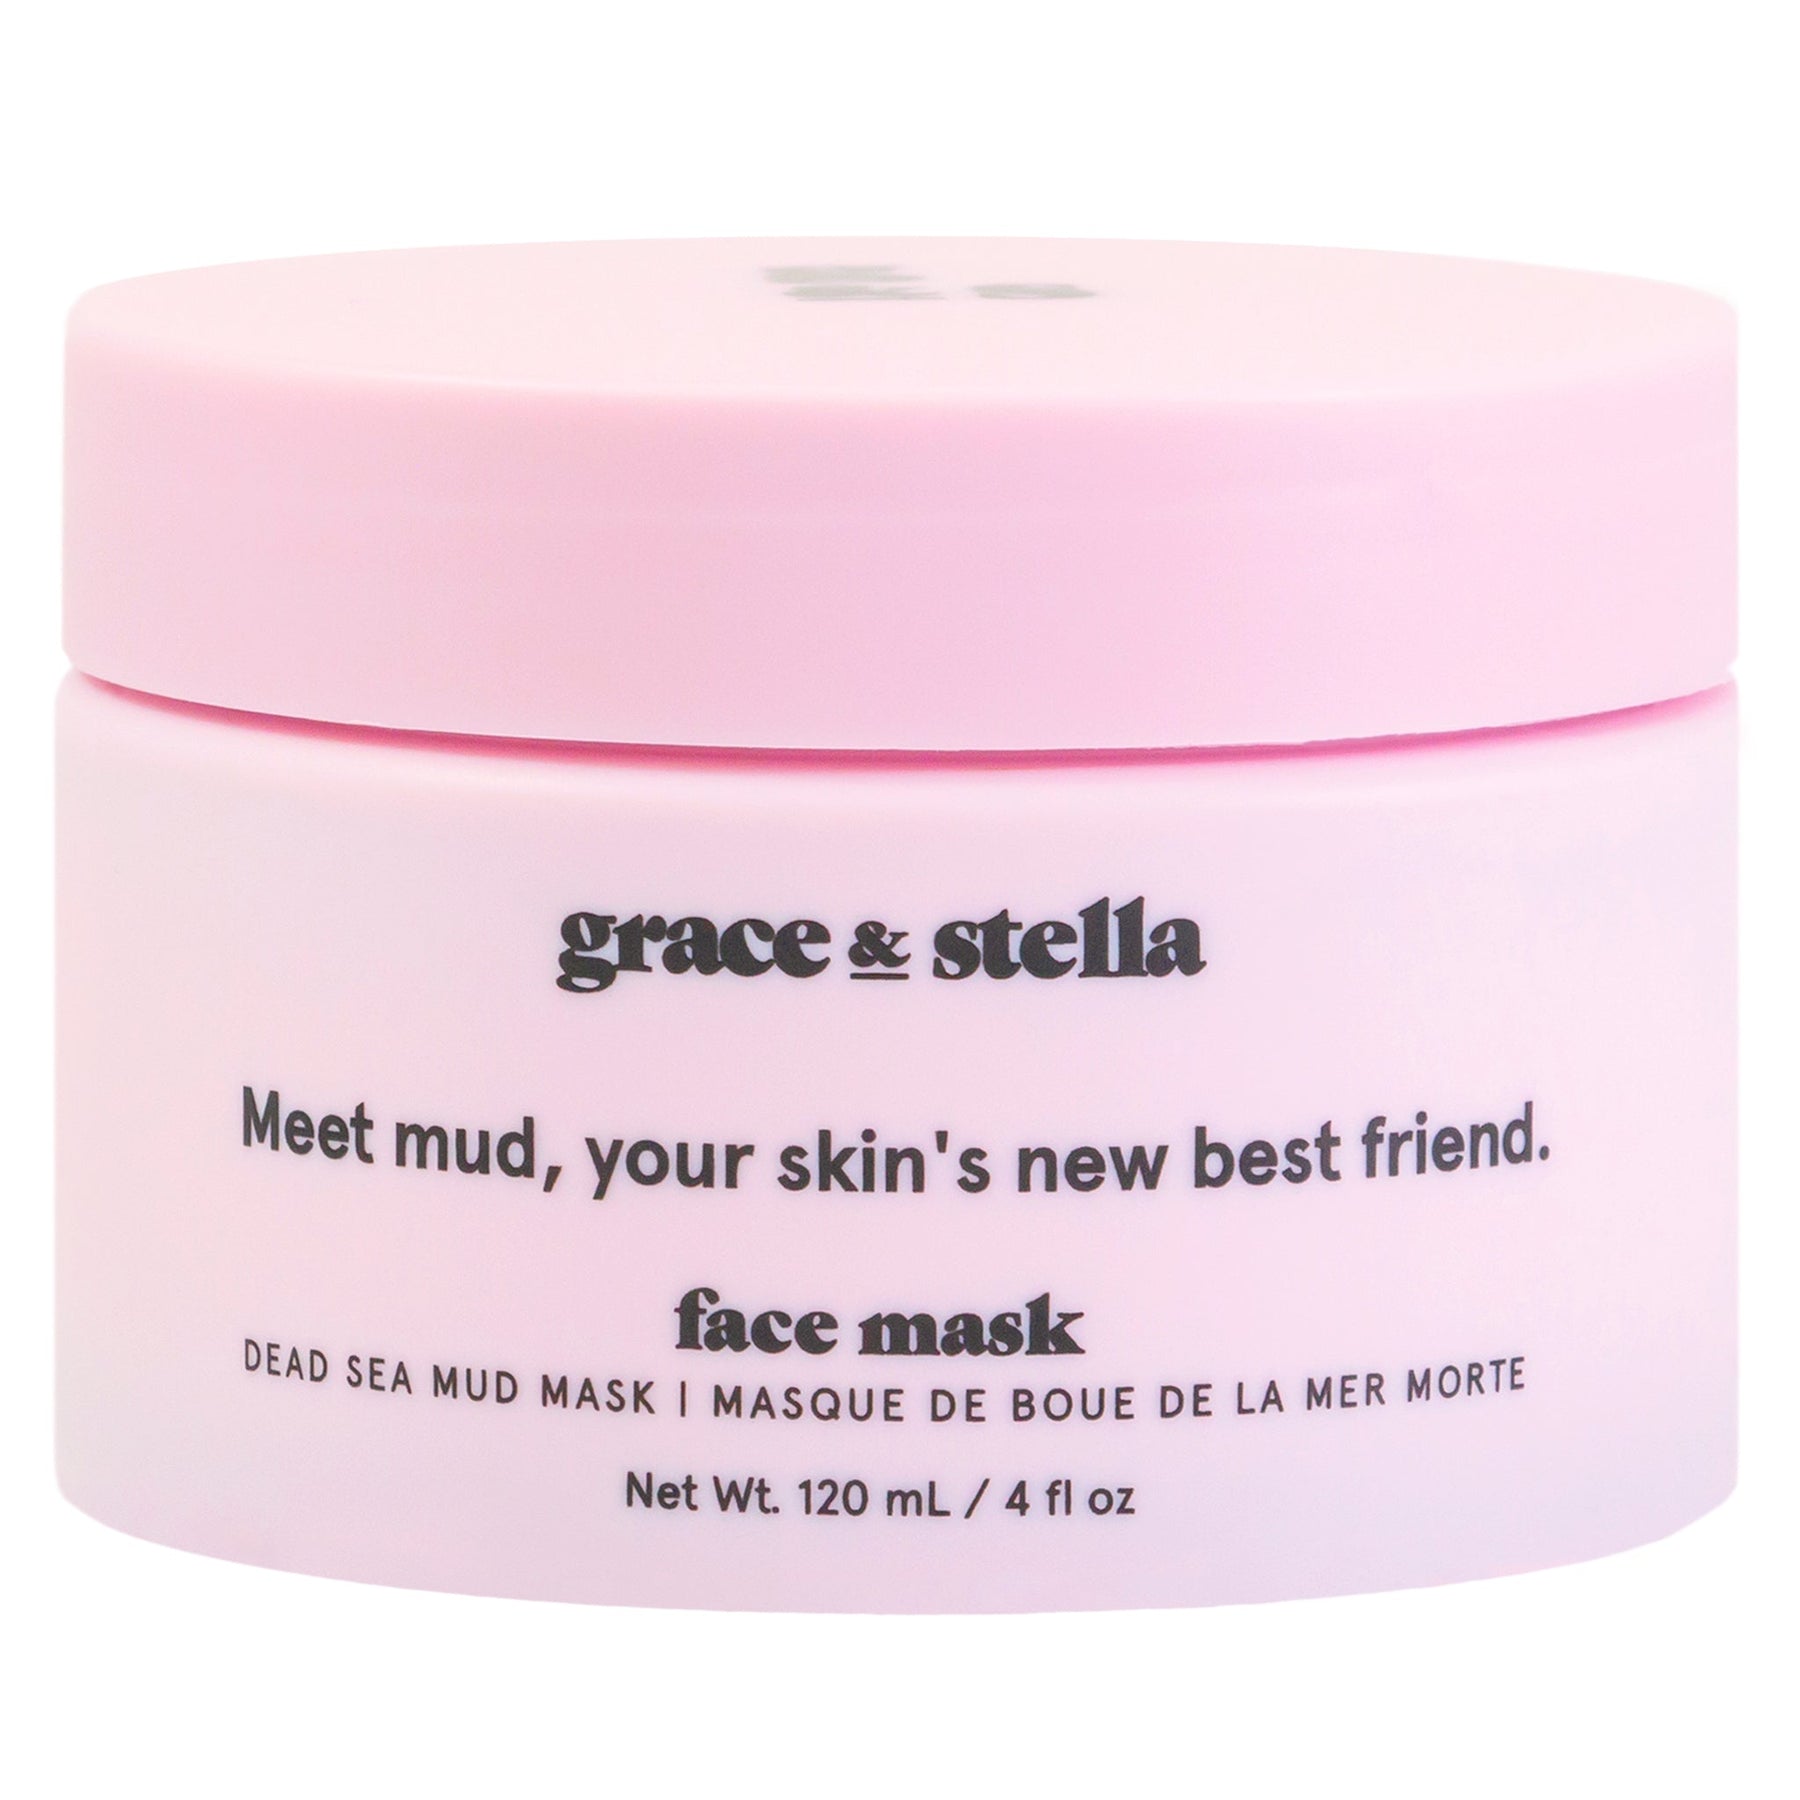 Grace & Stella Dead Sea Mud Face Mask